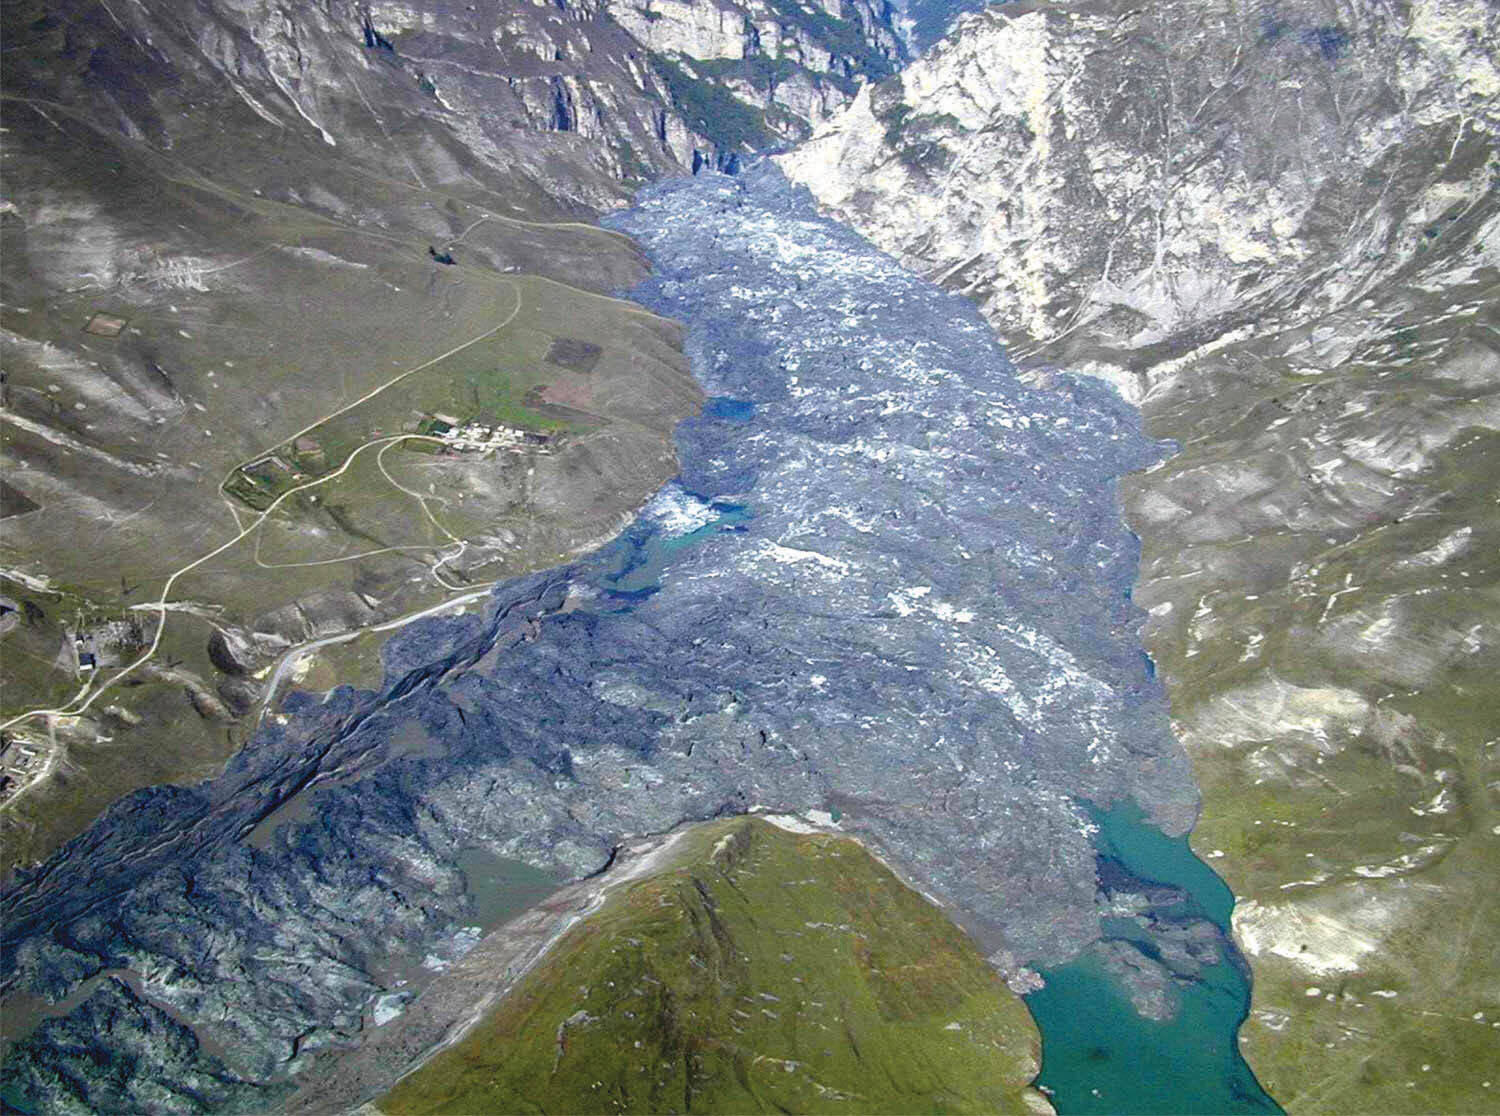 Ледник колка Кармадонское ущелье 2002